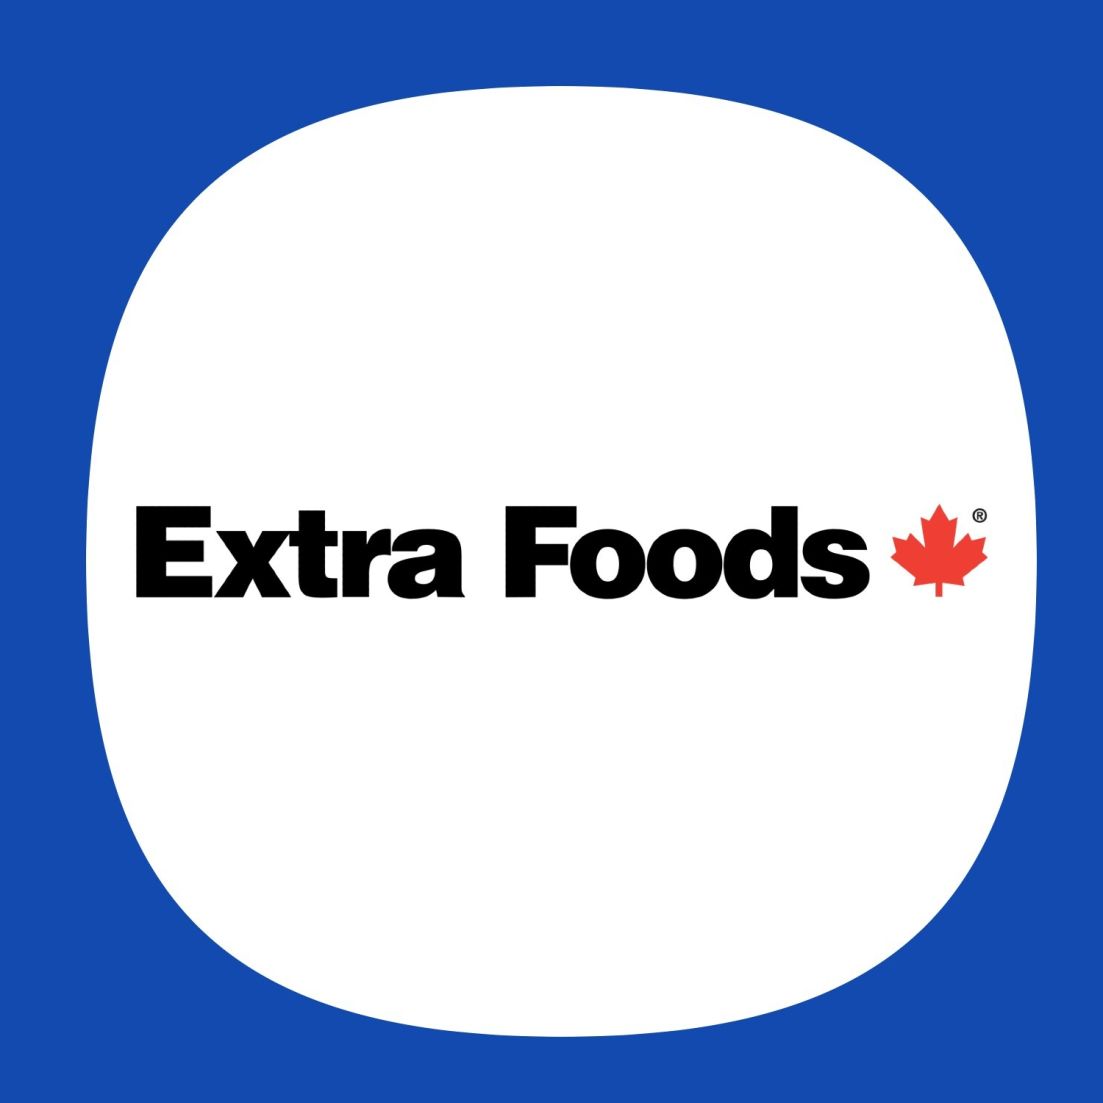 Extra foods